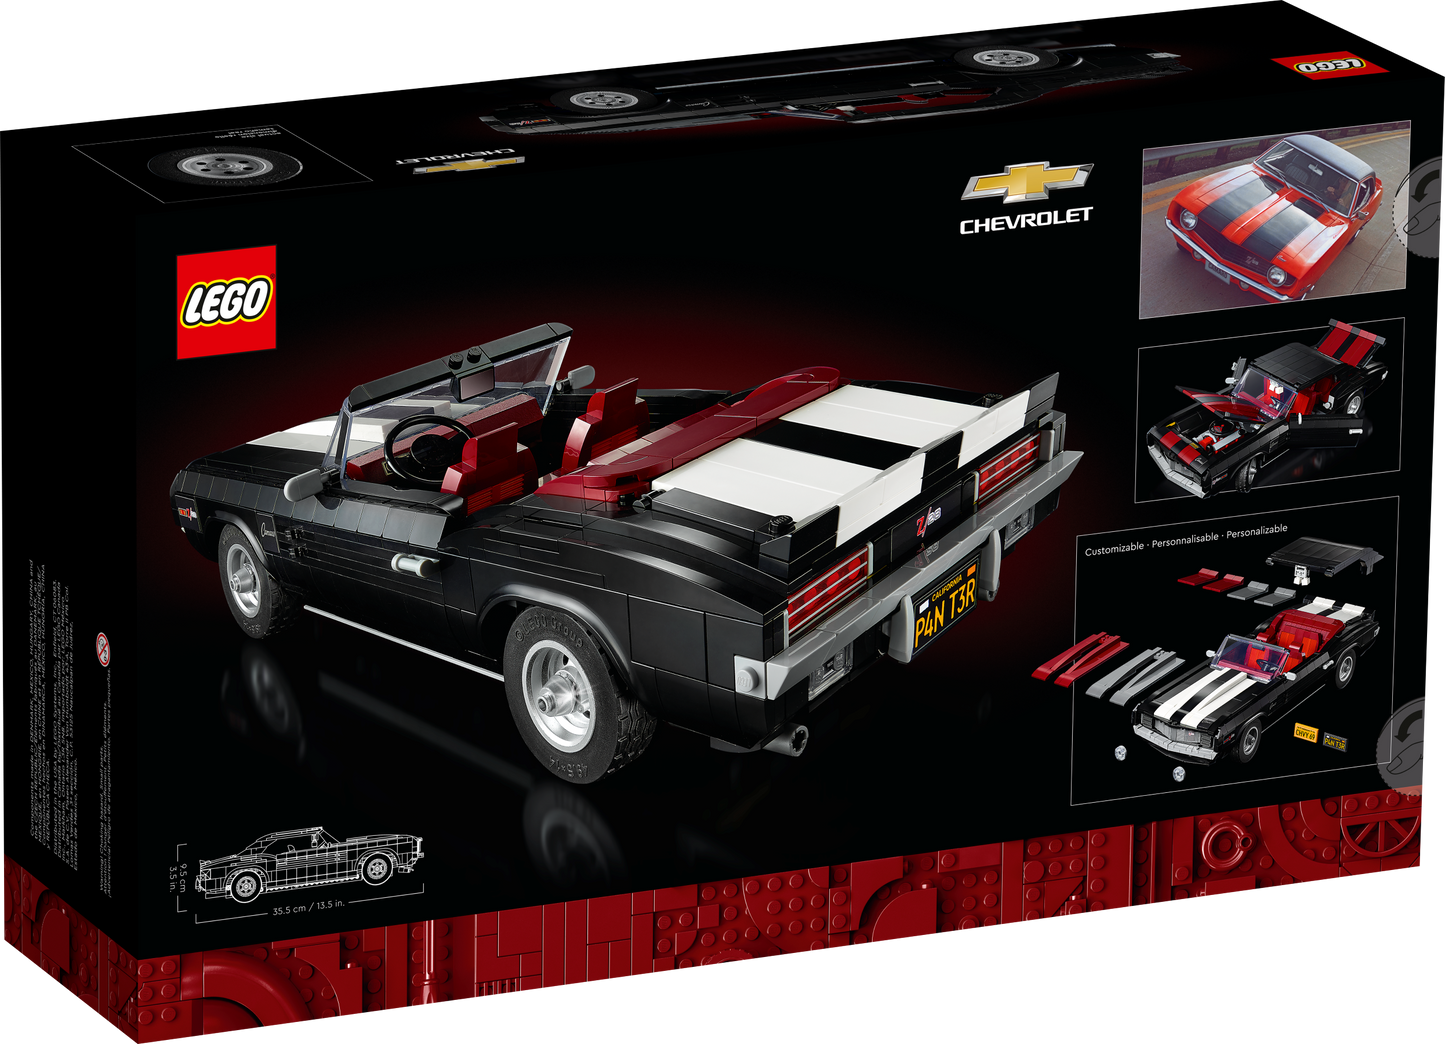 10304 LEGO Creator - Chevrolet Camaro Z28